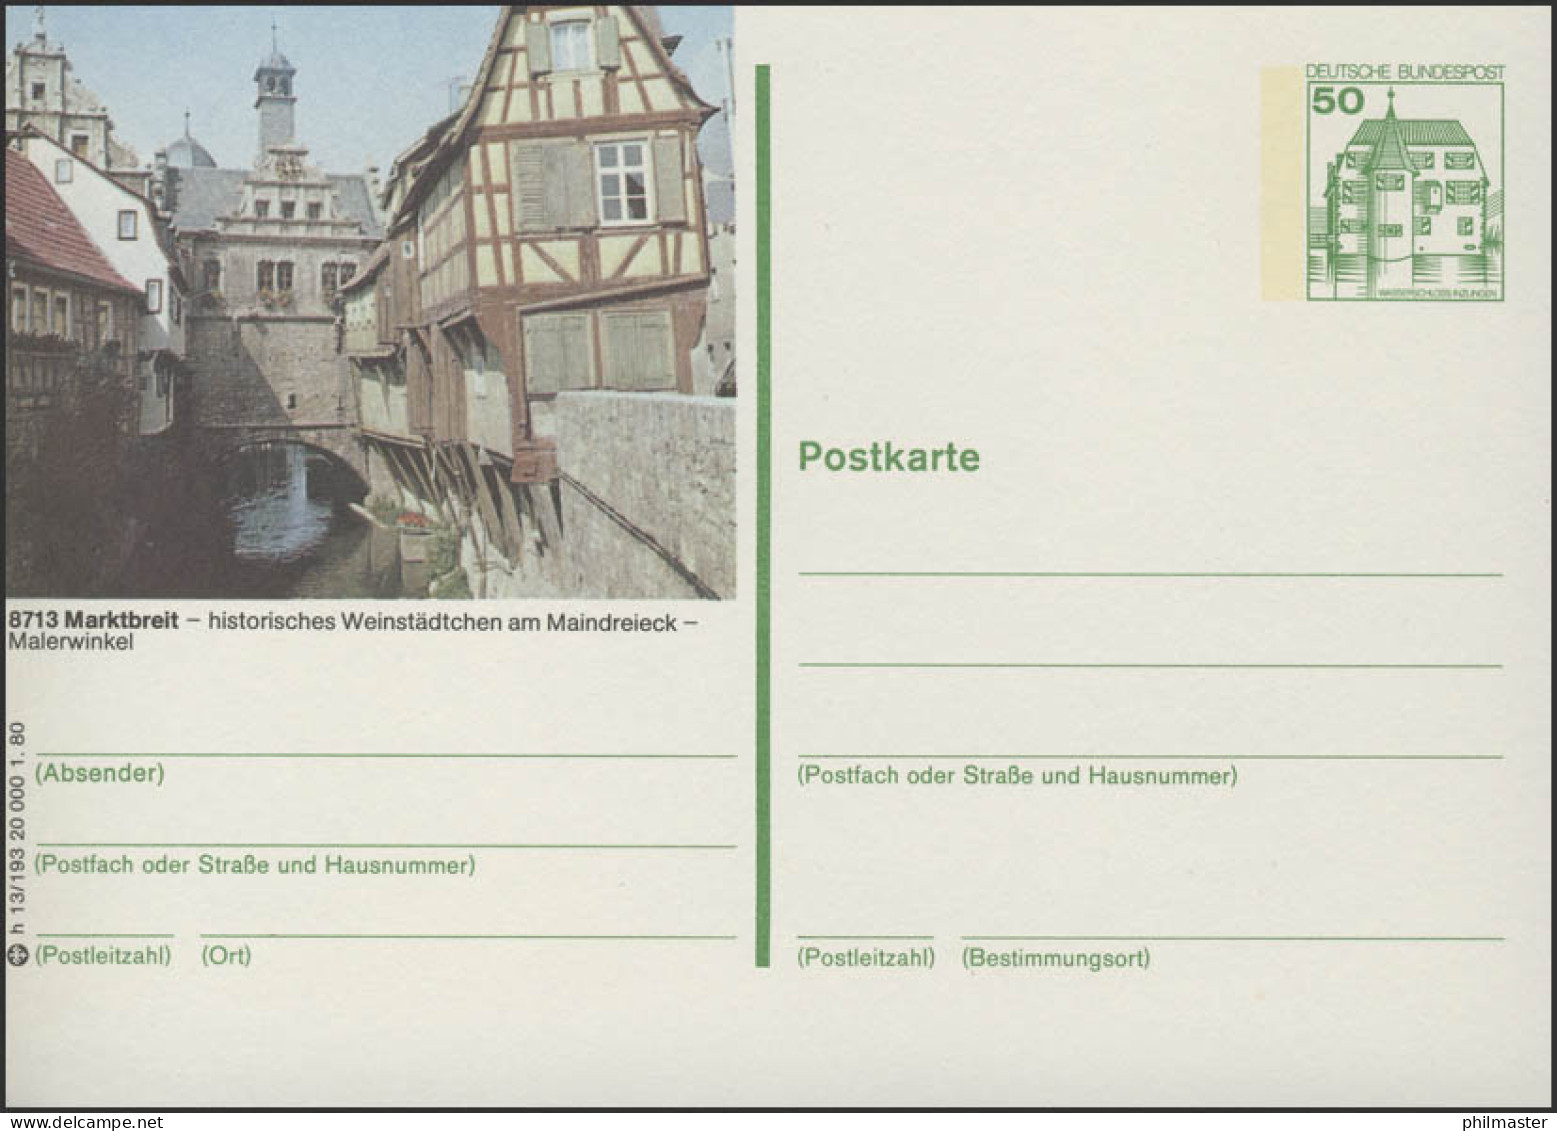 P130-h13/193 - 8713 Marktbreit, Malerwinkel ** - Illustrated Postcards - Mint